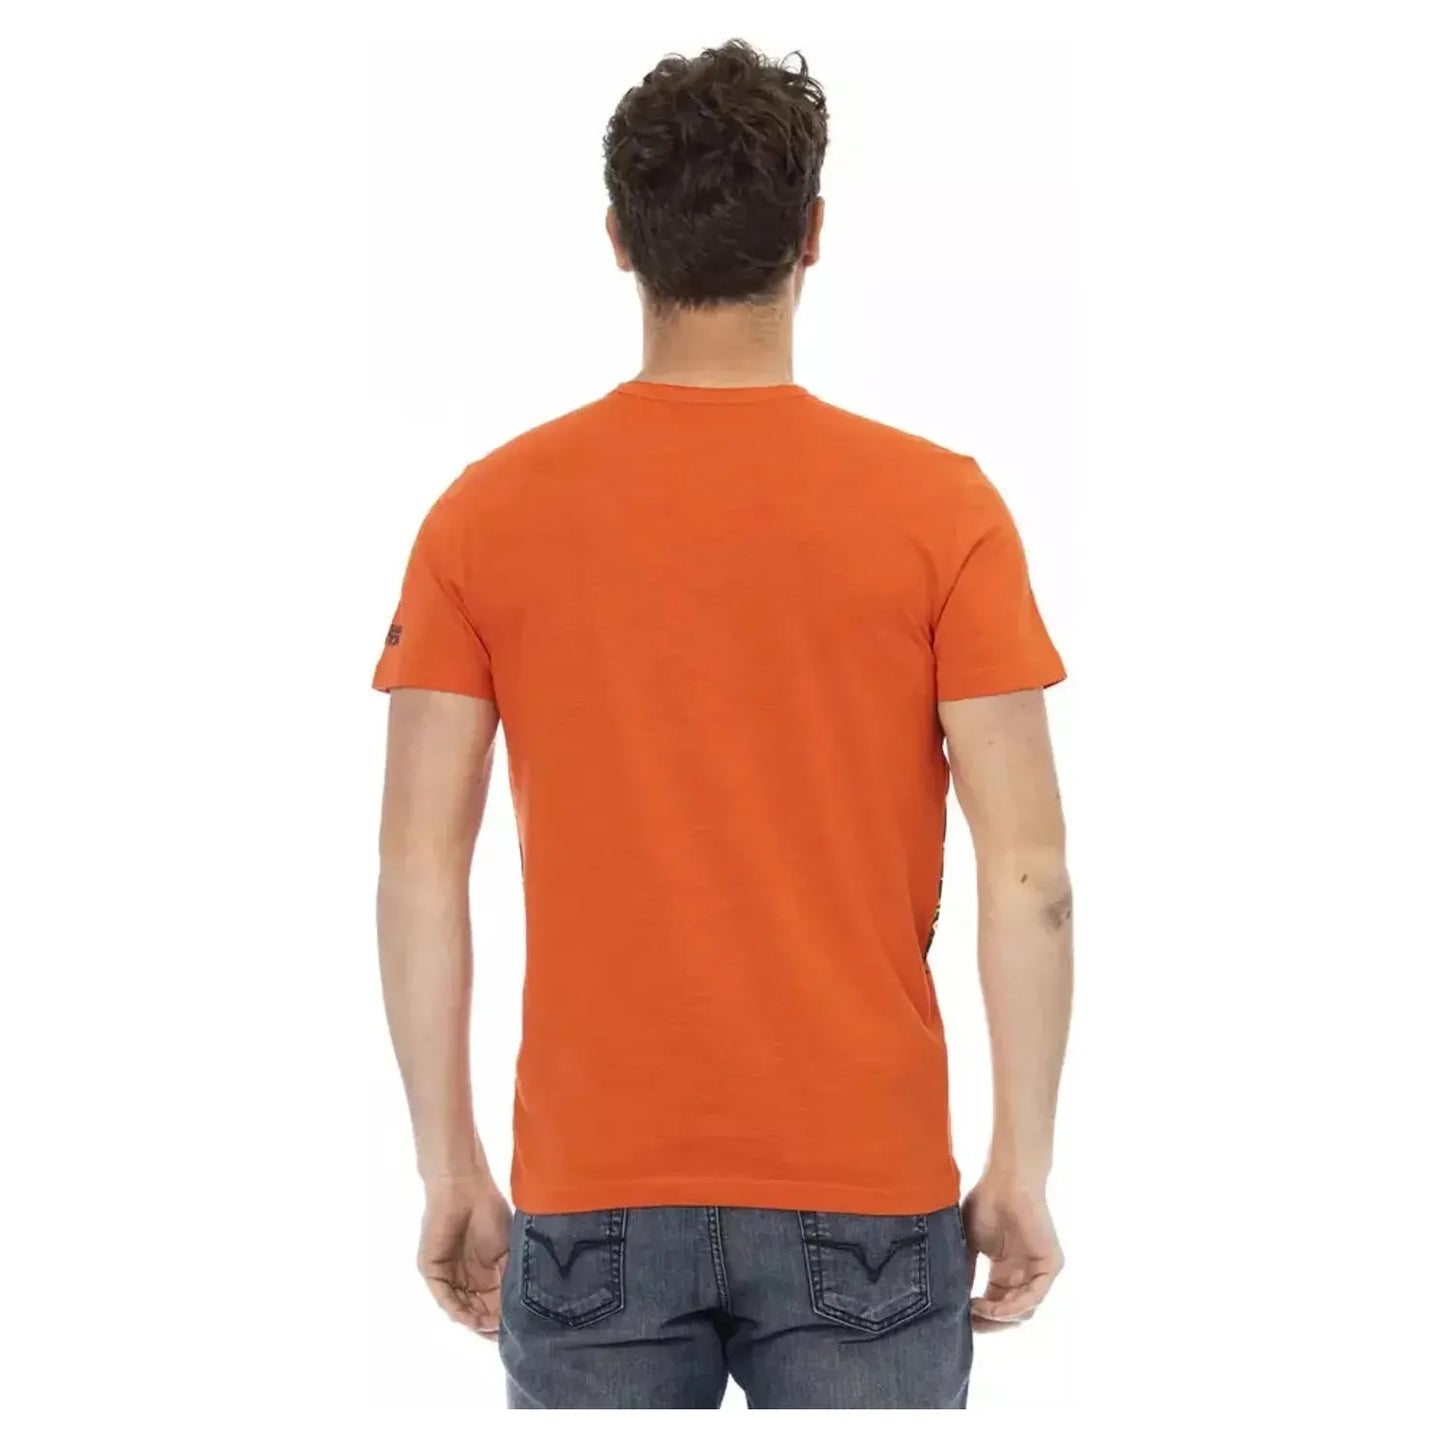 Trussardi Action Vibrant Orange Round Neck Tee with Print orange-cotton-t-shirt-27 product-22735-979381077-19-d7161bb1-e2e.webp